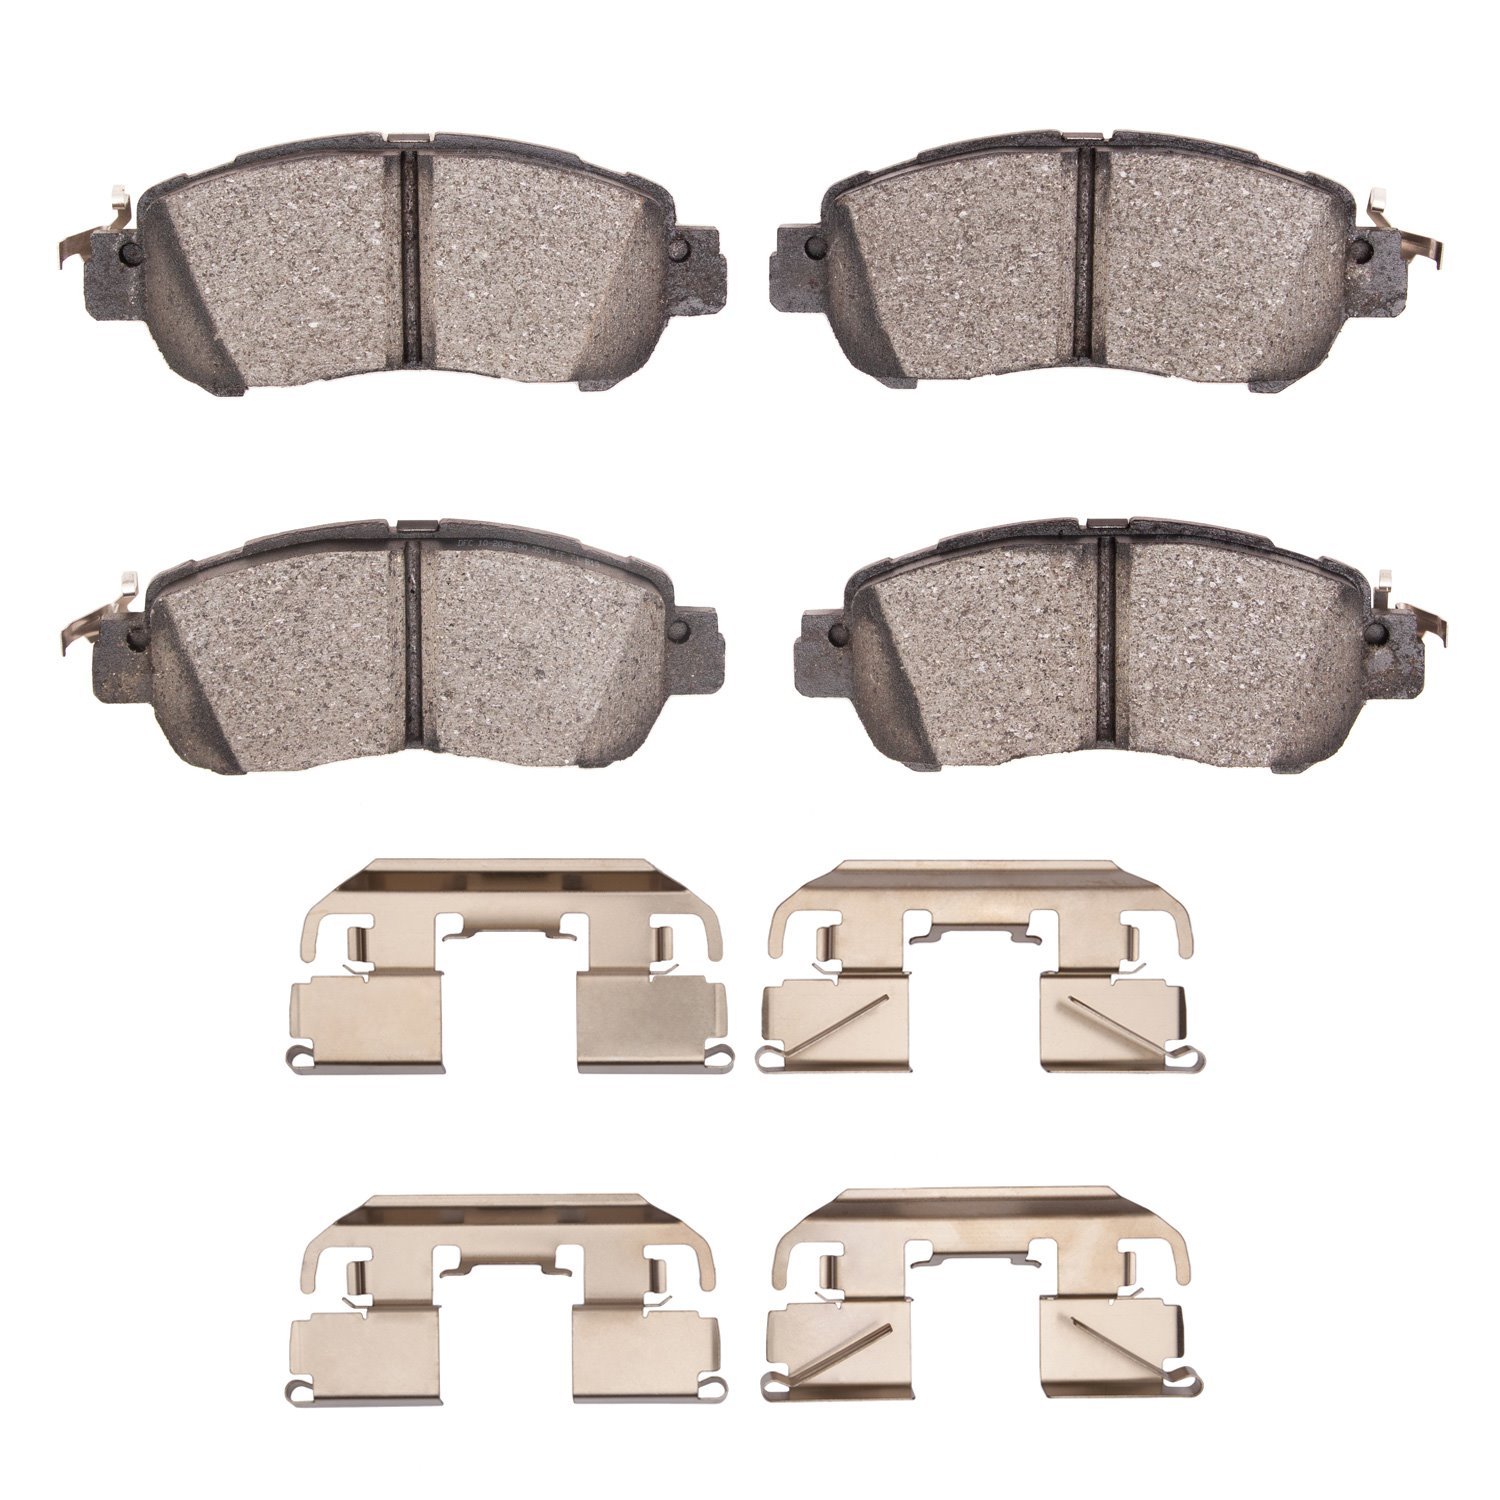 1310-2038-01 3000-Series Ceramic Brake Pads & Hardware Kit, Fits Select Infiniti/Nissan, Position: Front